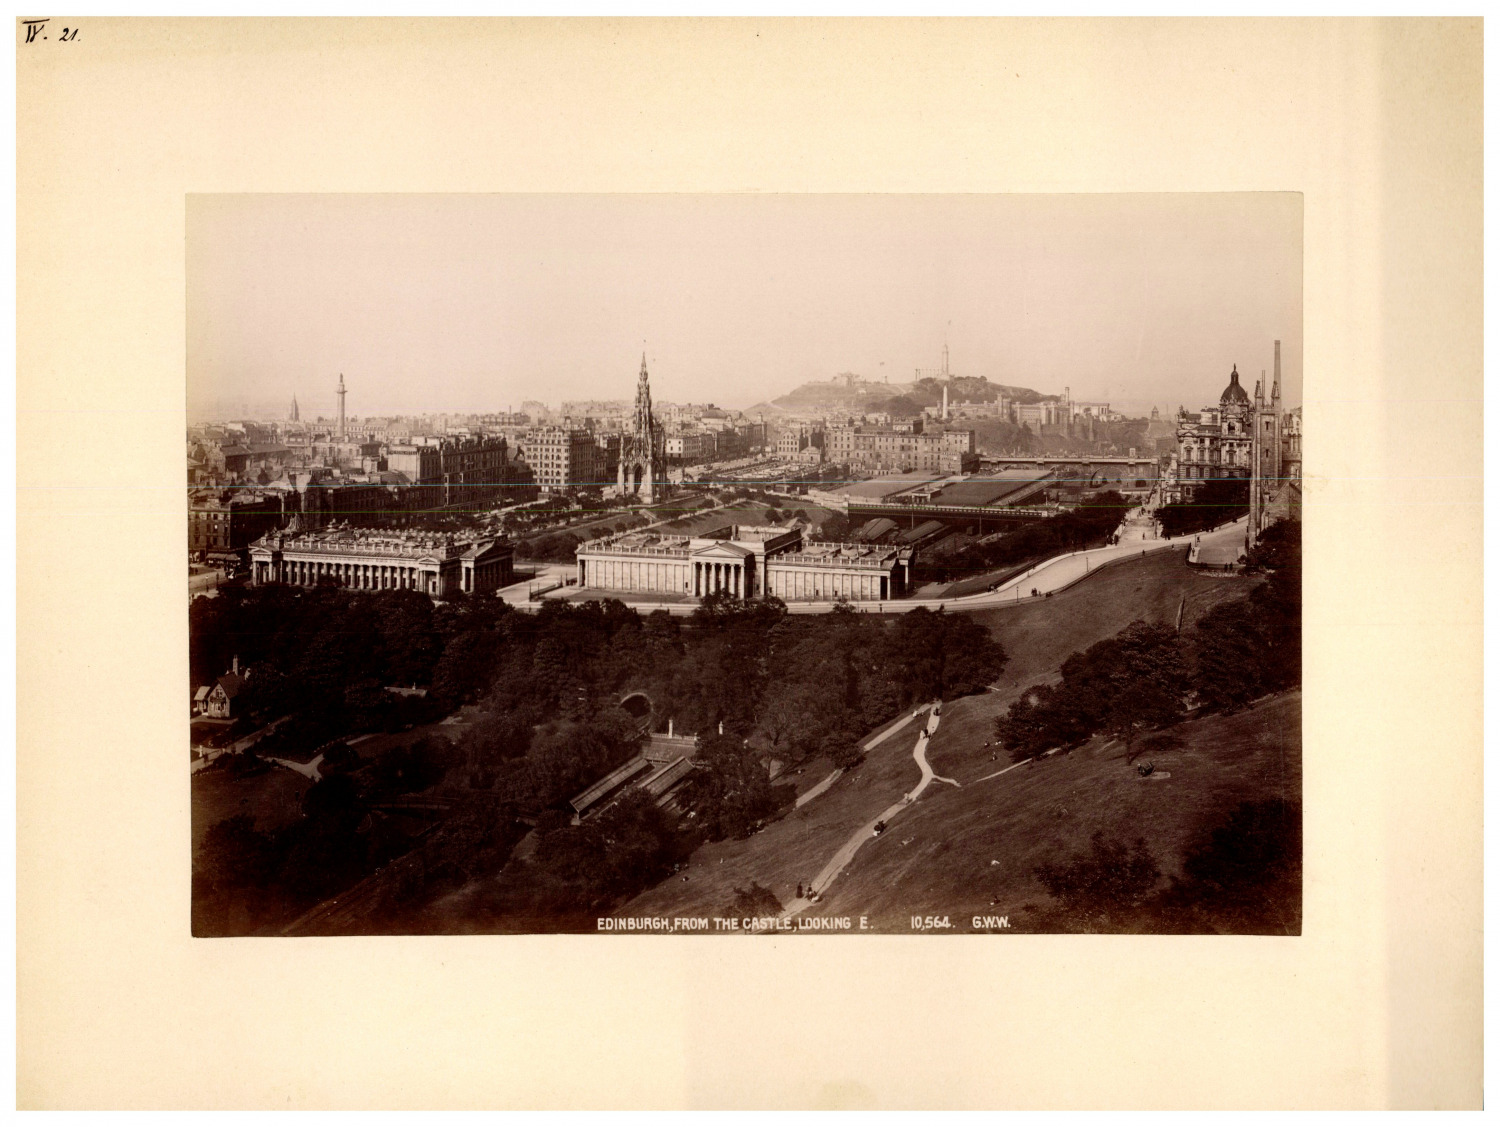 Scotland, Edinburgh, from the castle, G.W.W. Vintage print, albumin print print 